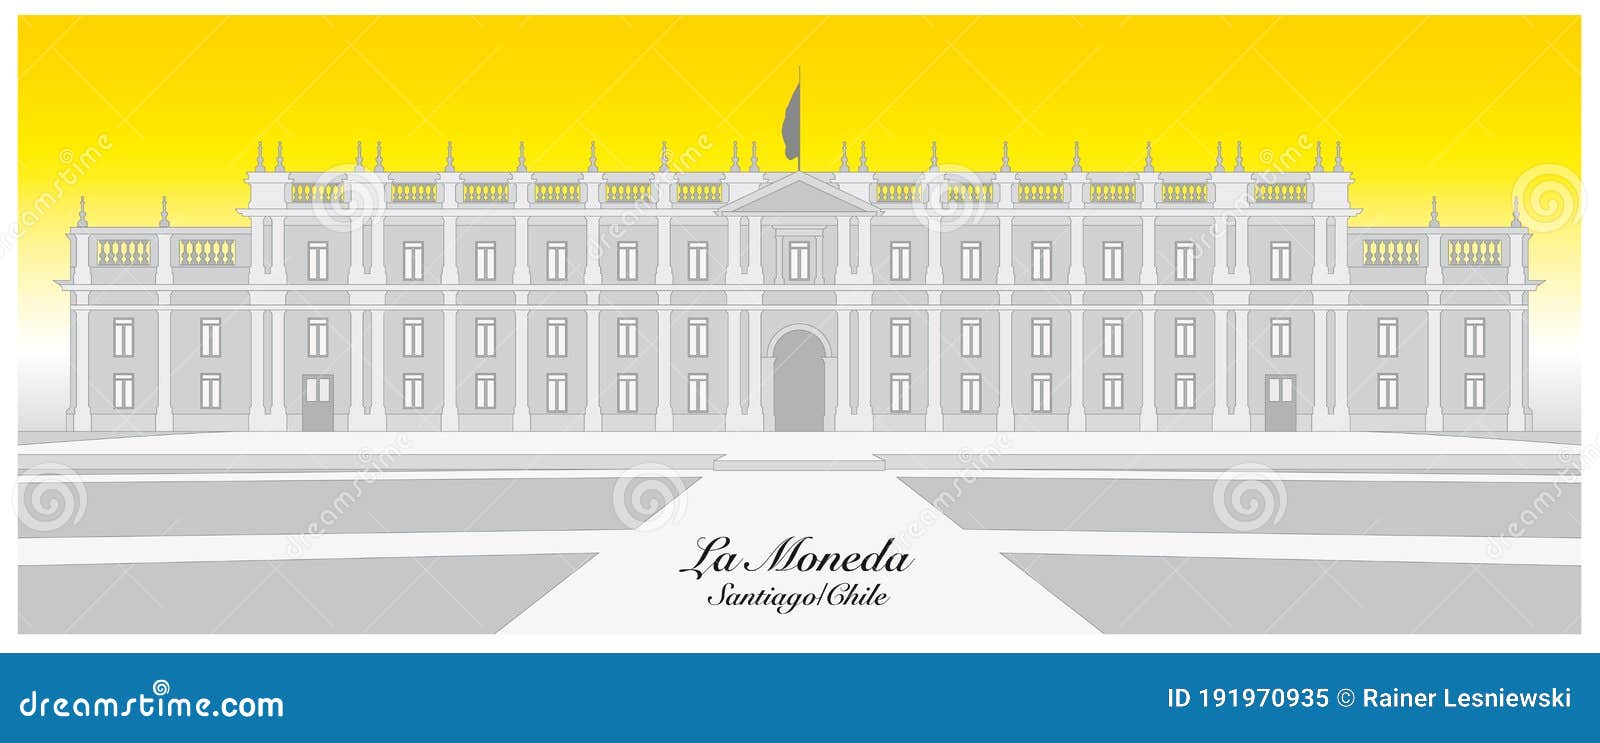  graphic of the chilean presidential palace la moneda in santiago, chile